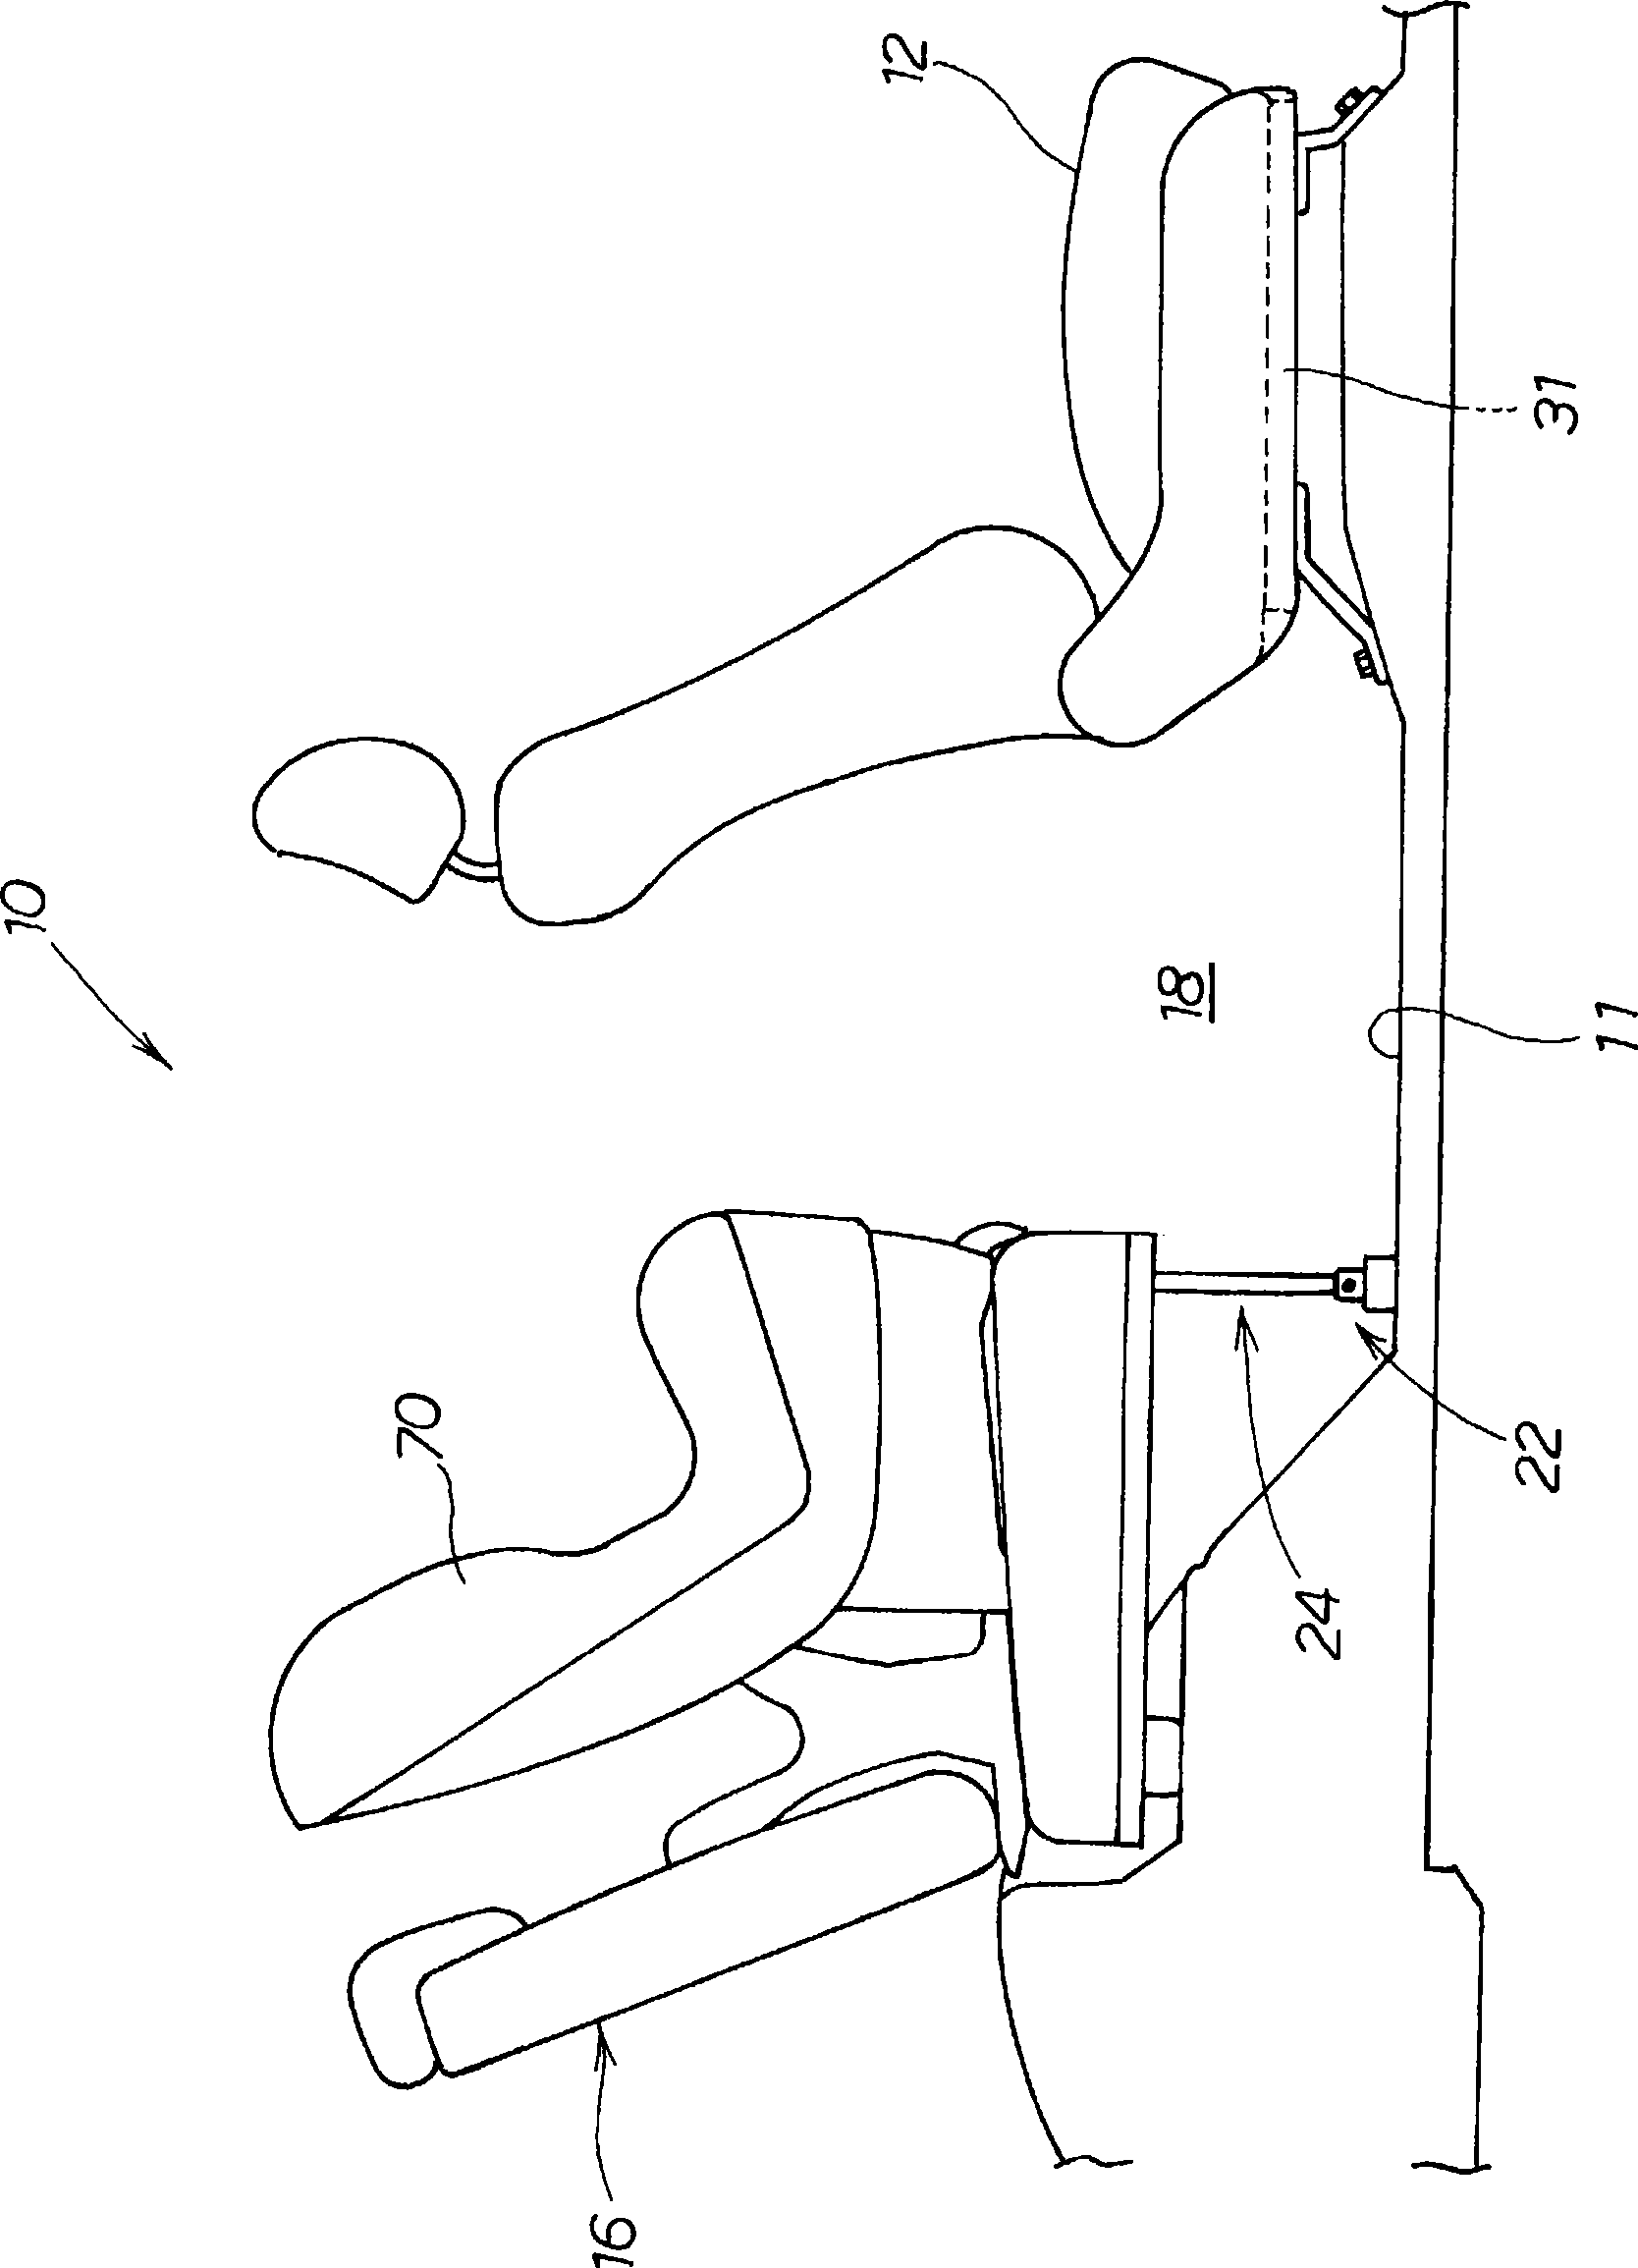 Vehicle seat device